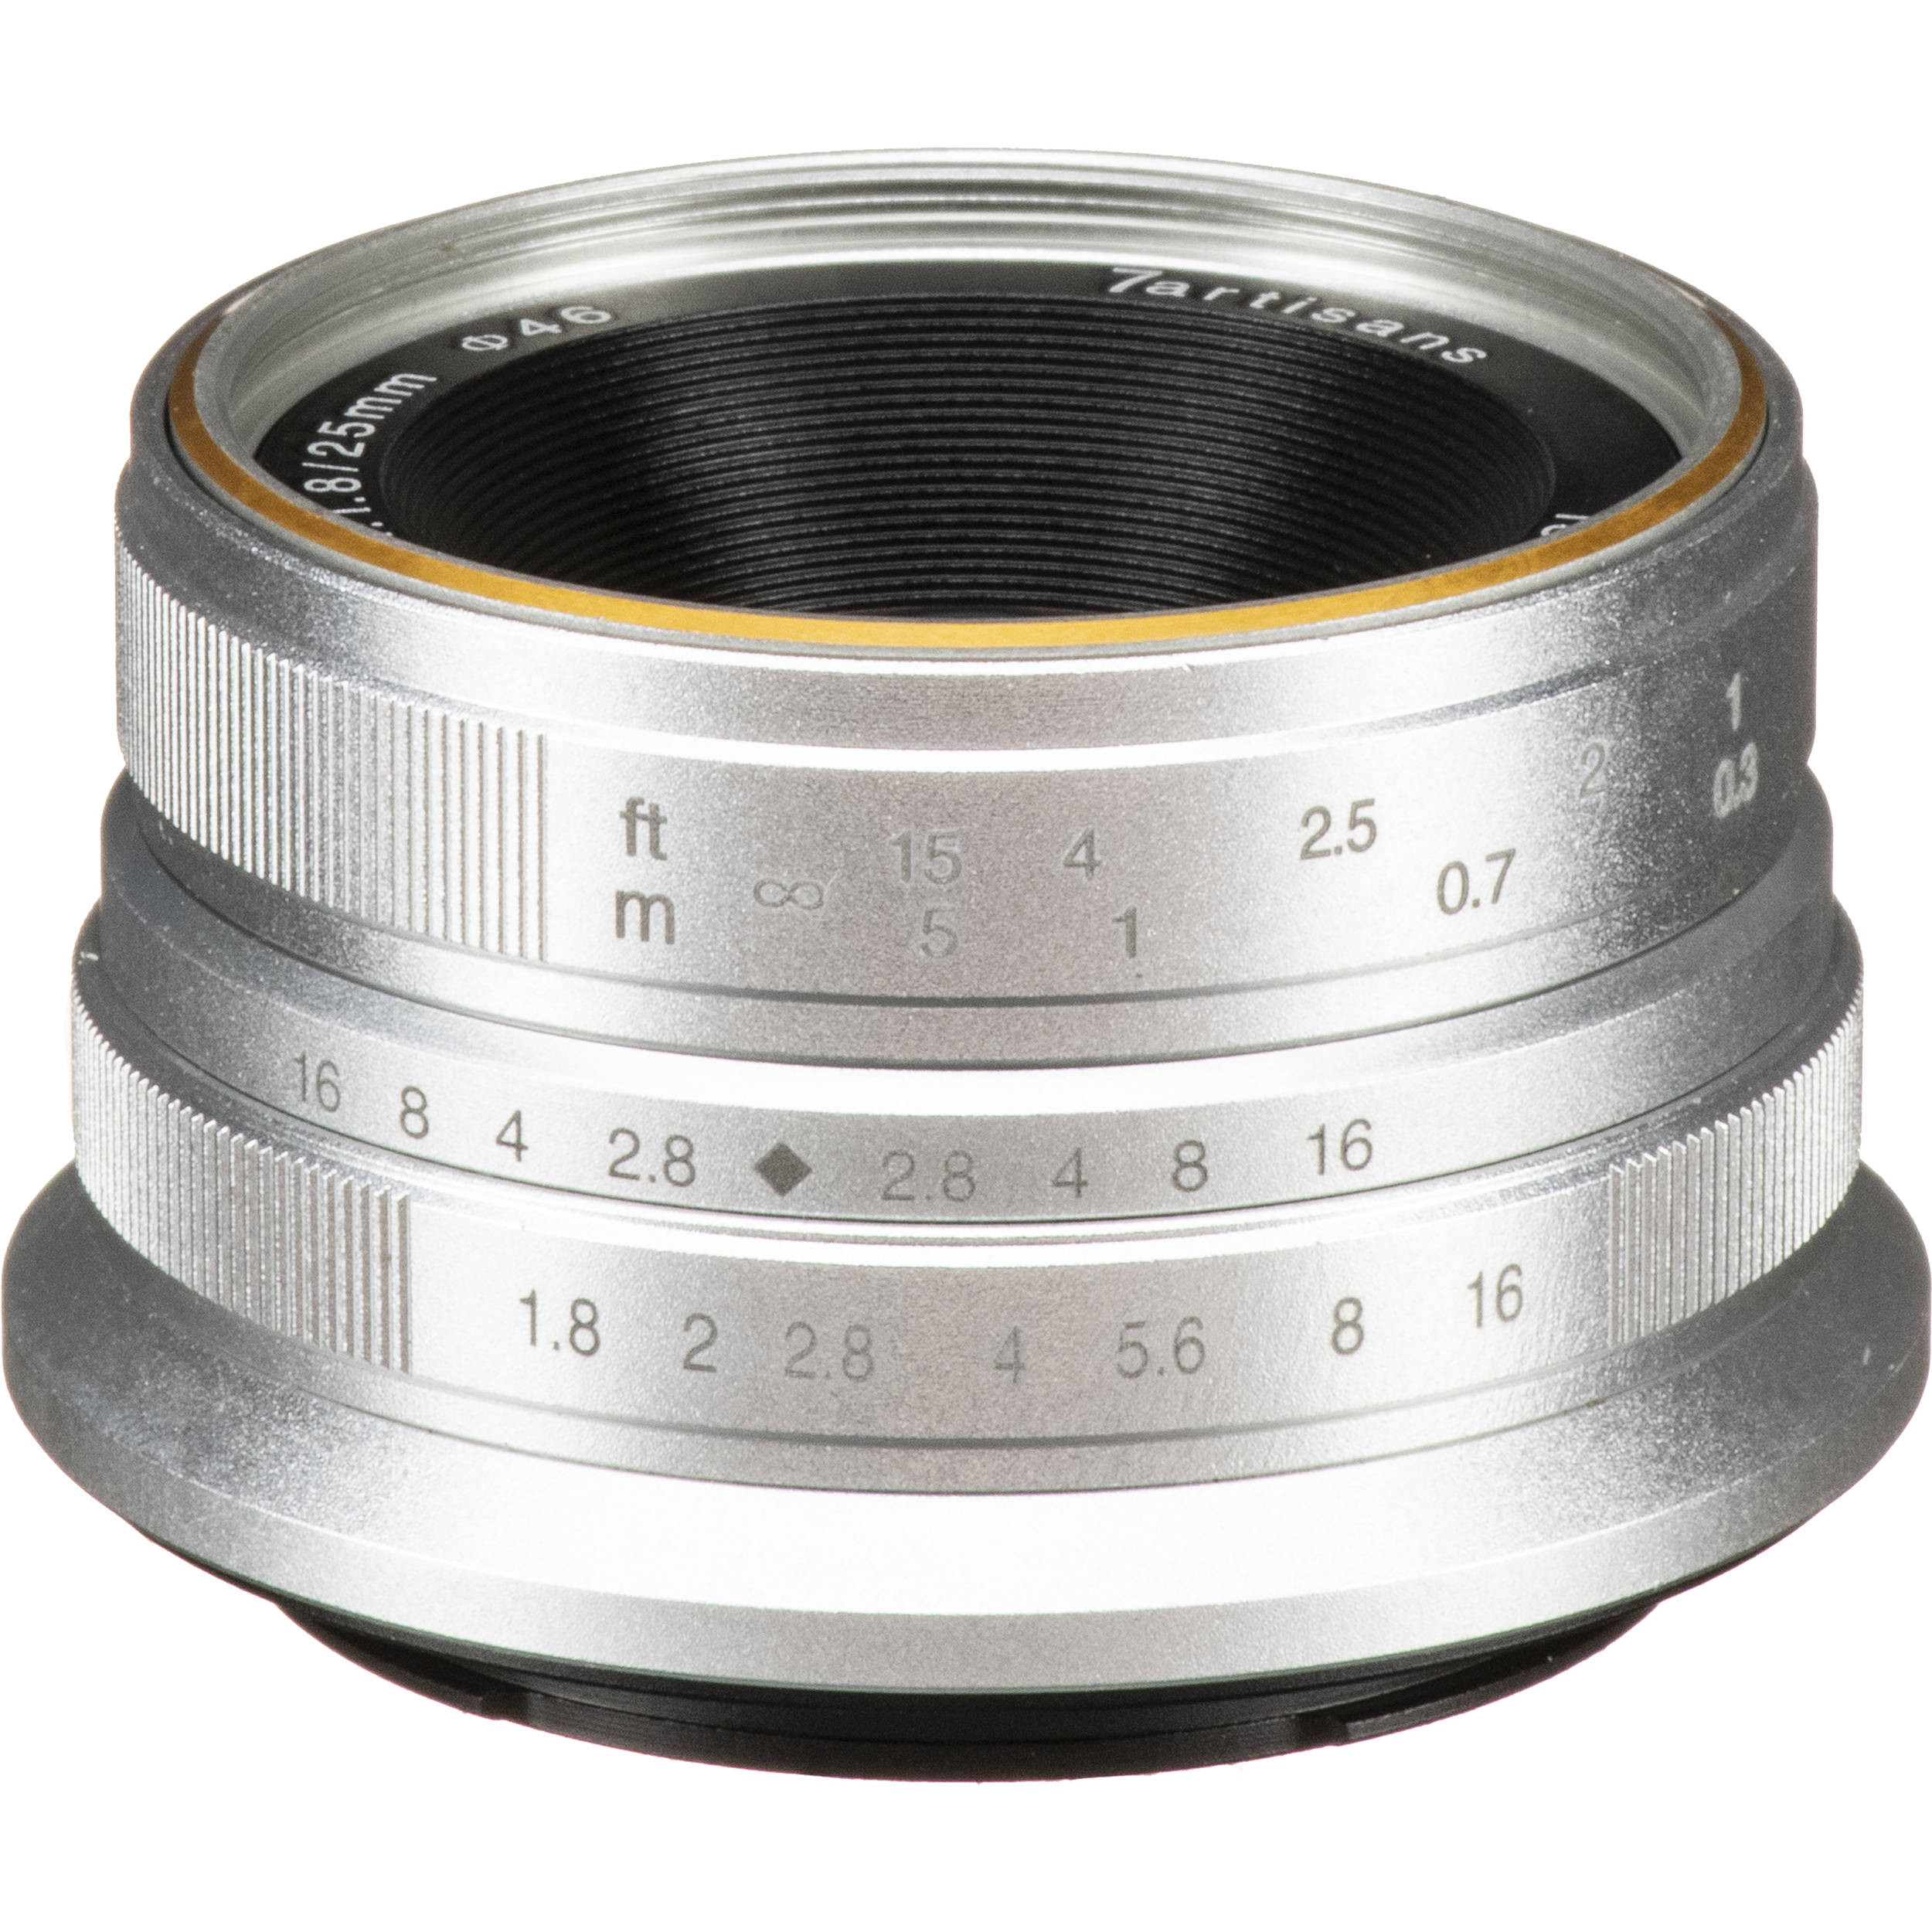 7Artisans 25mm f/1.8 Manual Focus Lens (Canon M) Silver